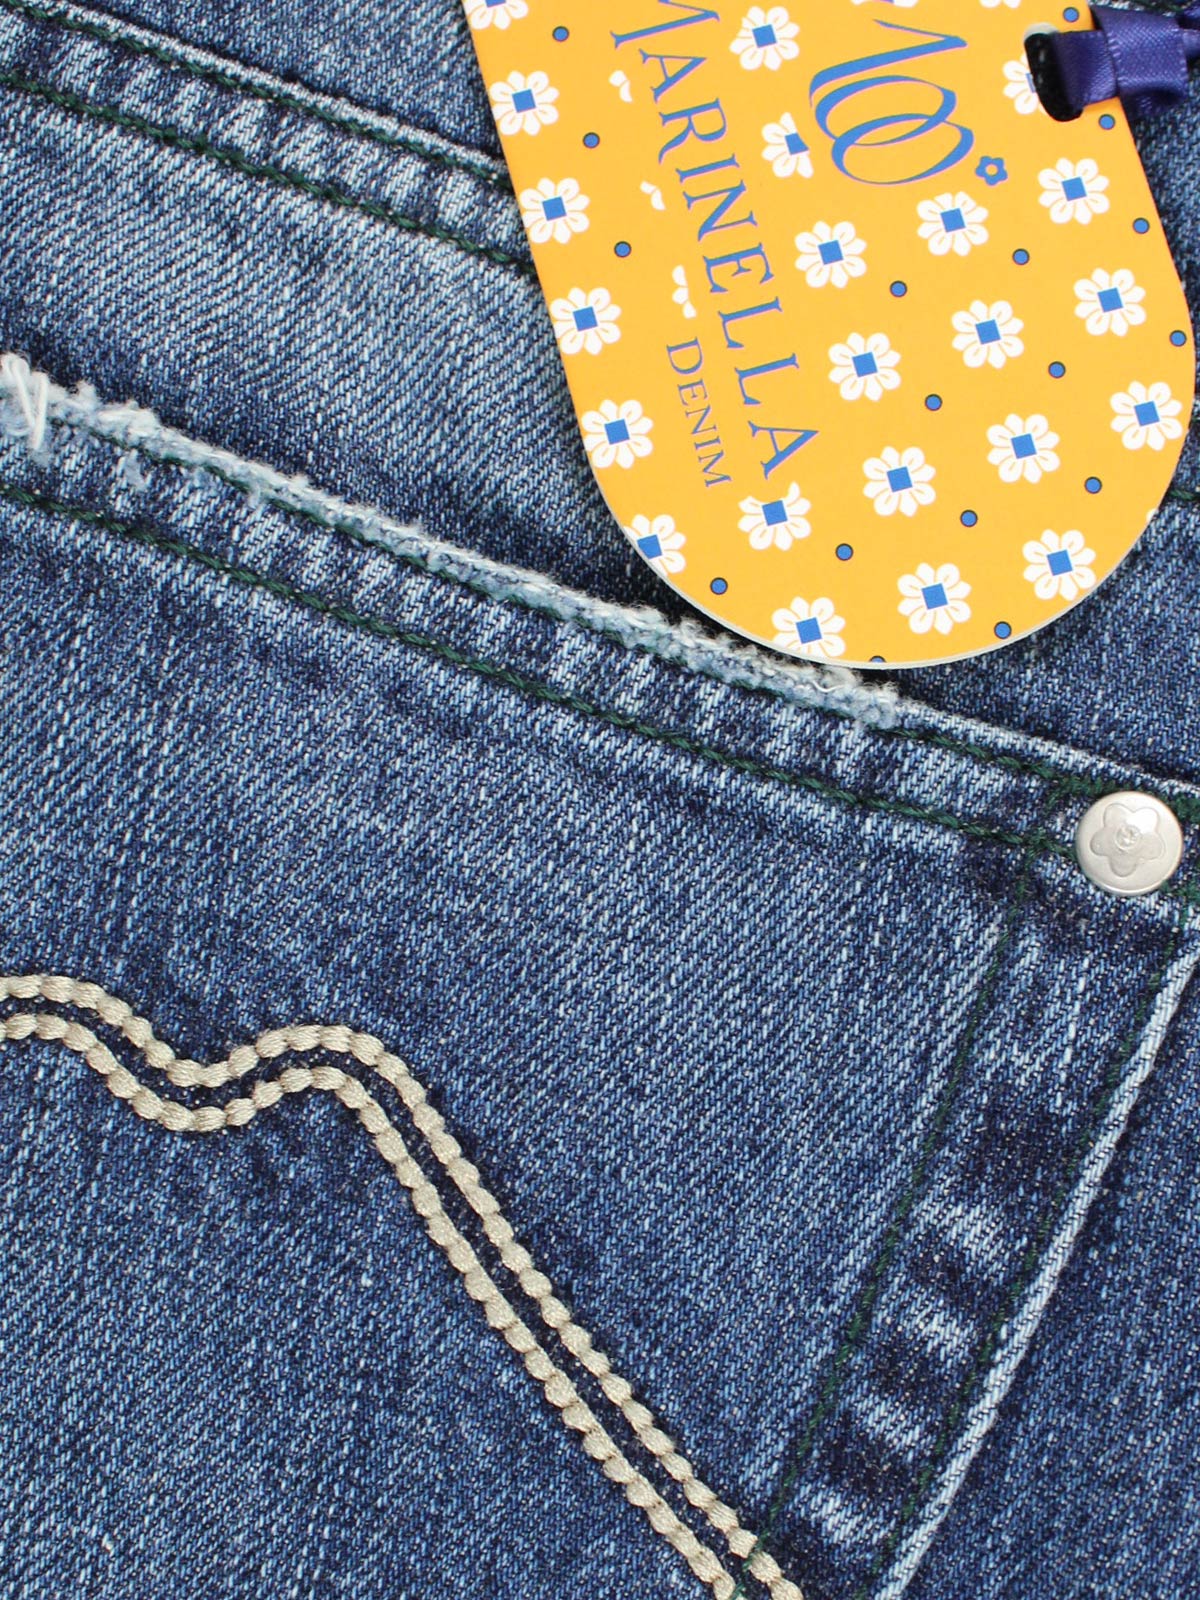 Marinella Denim Jeans Vintage Button Fly Slim Fit